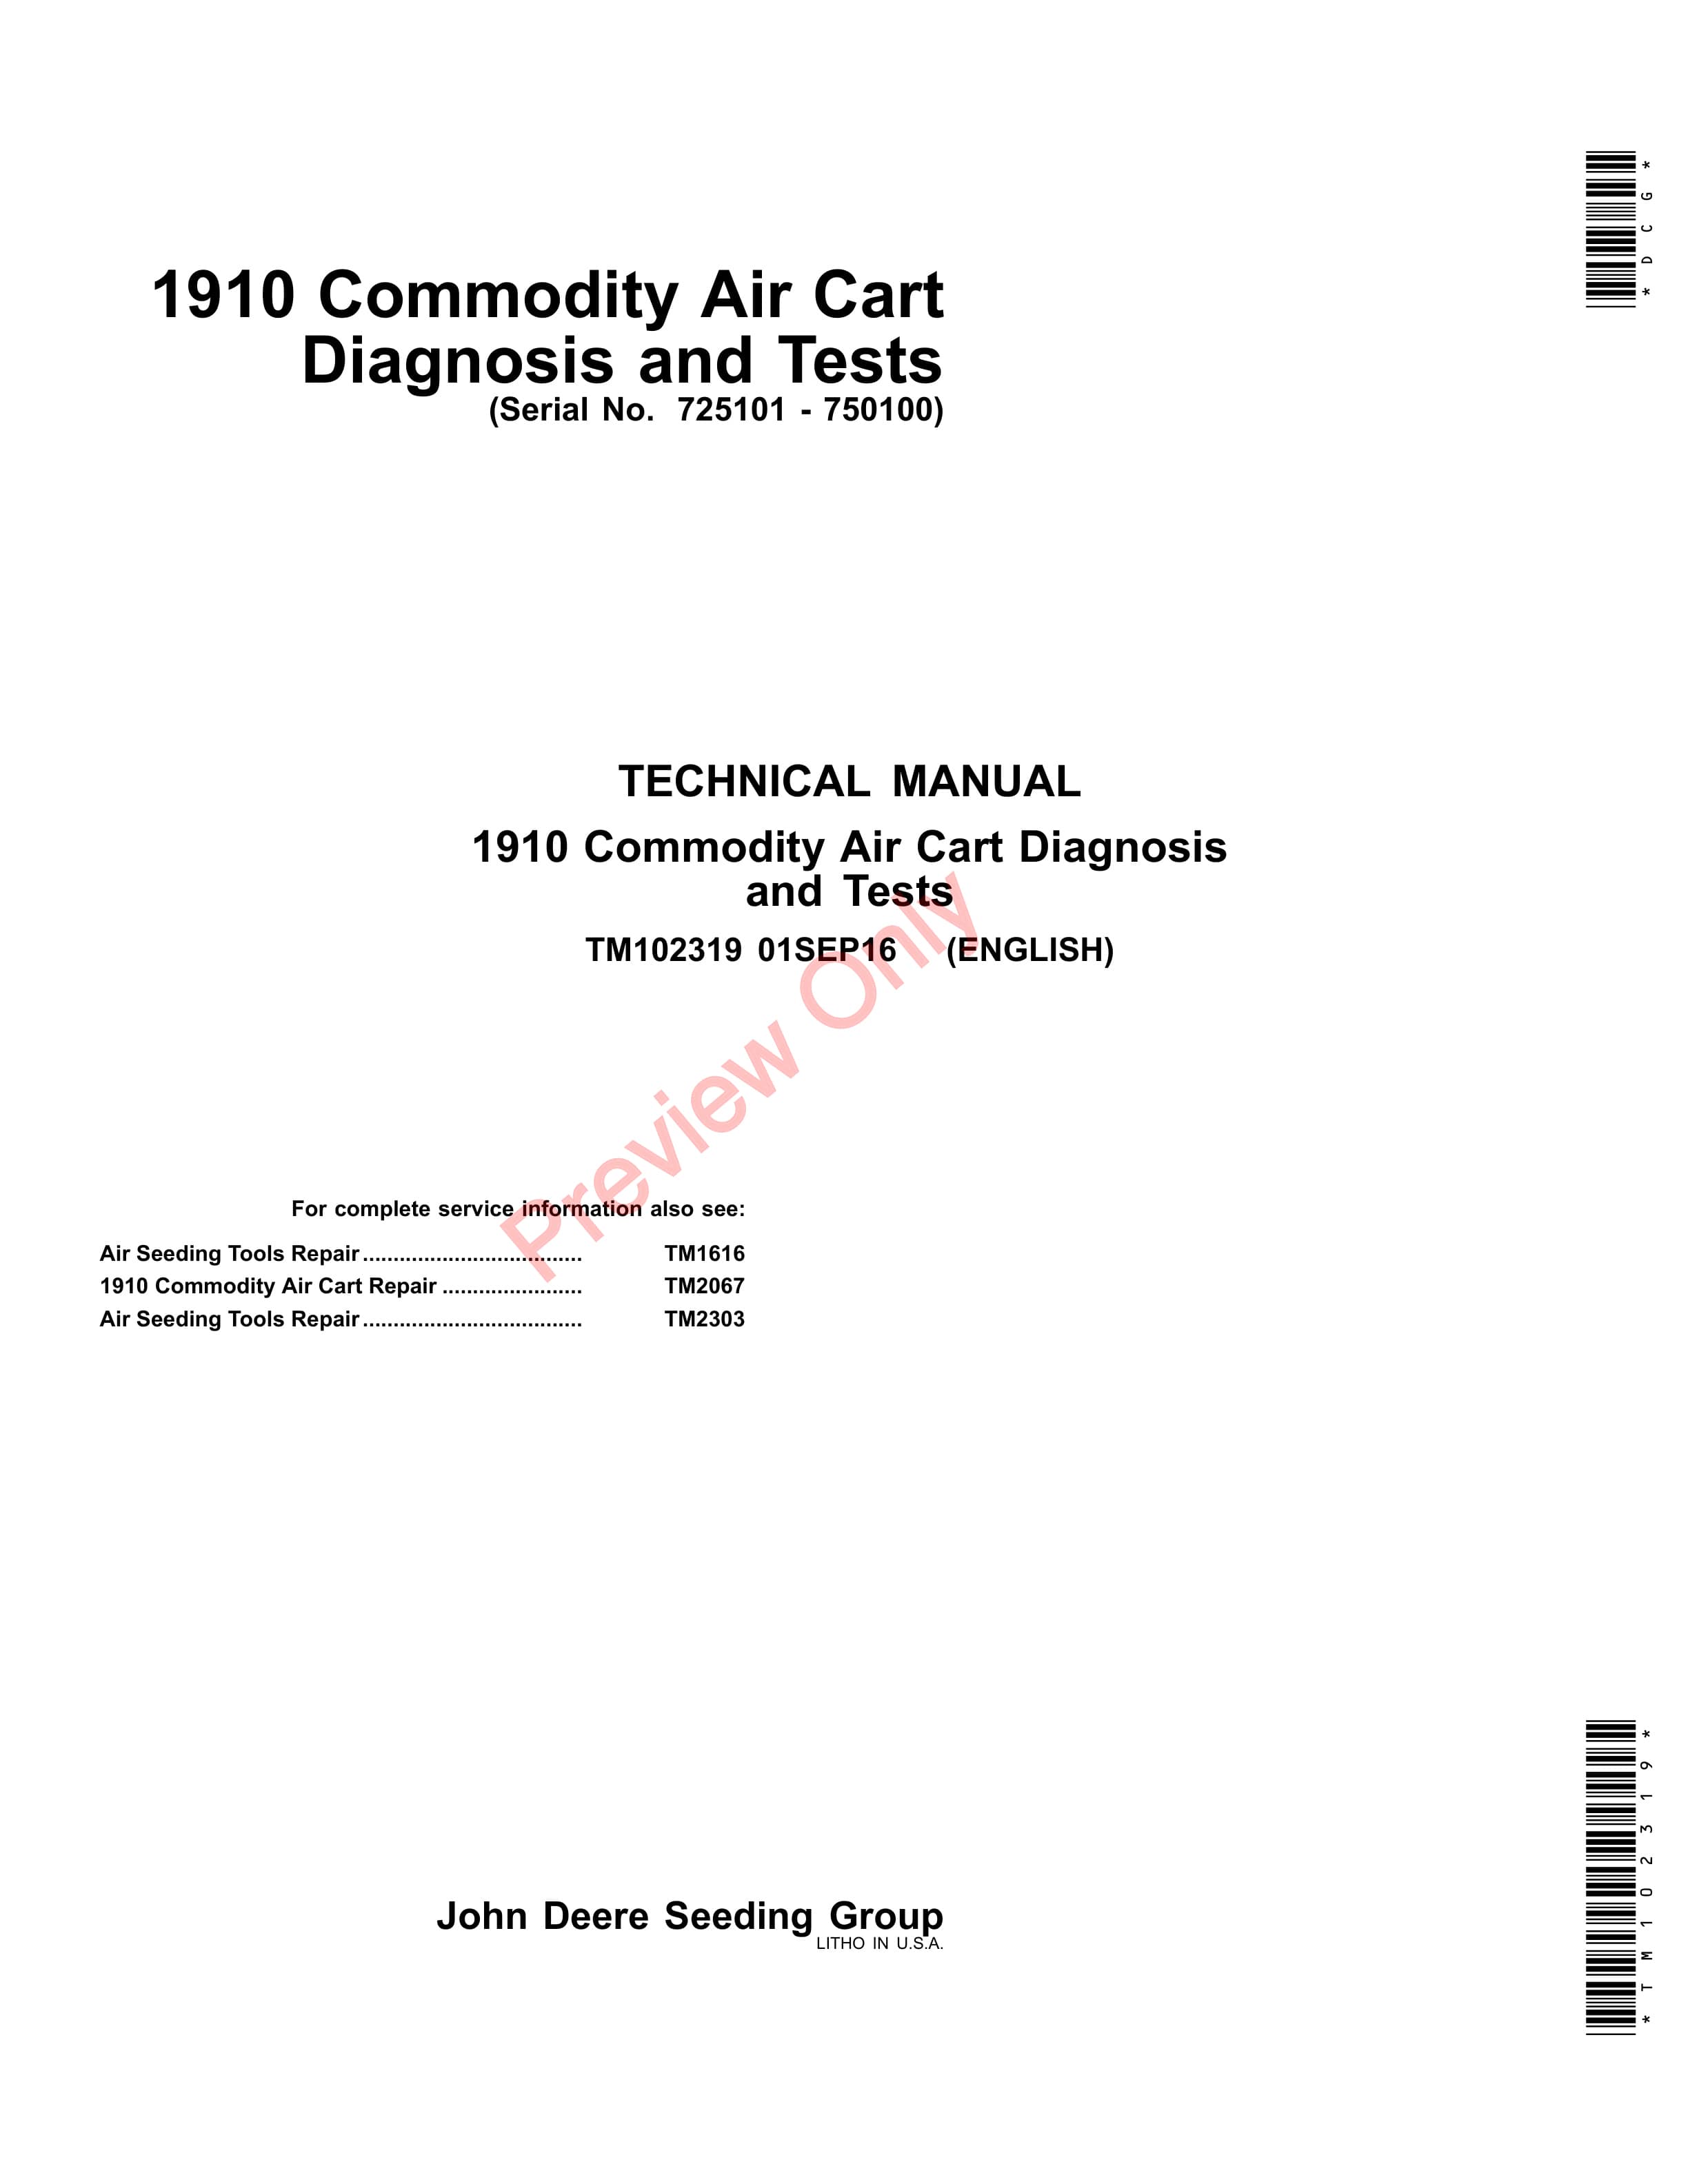 John Deere 1910 Commodity Air Cart Service Information TM102319 01SEP16-1